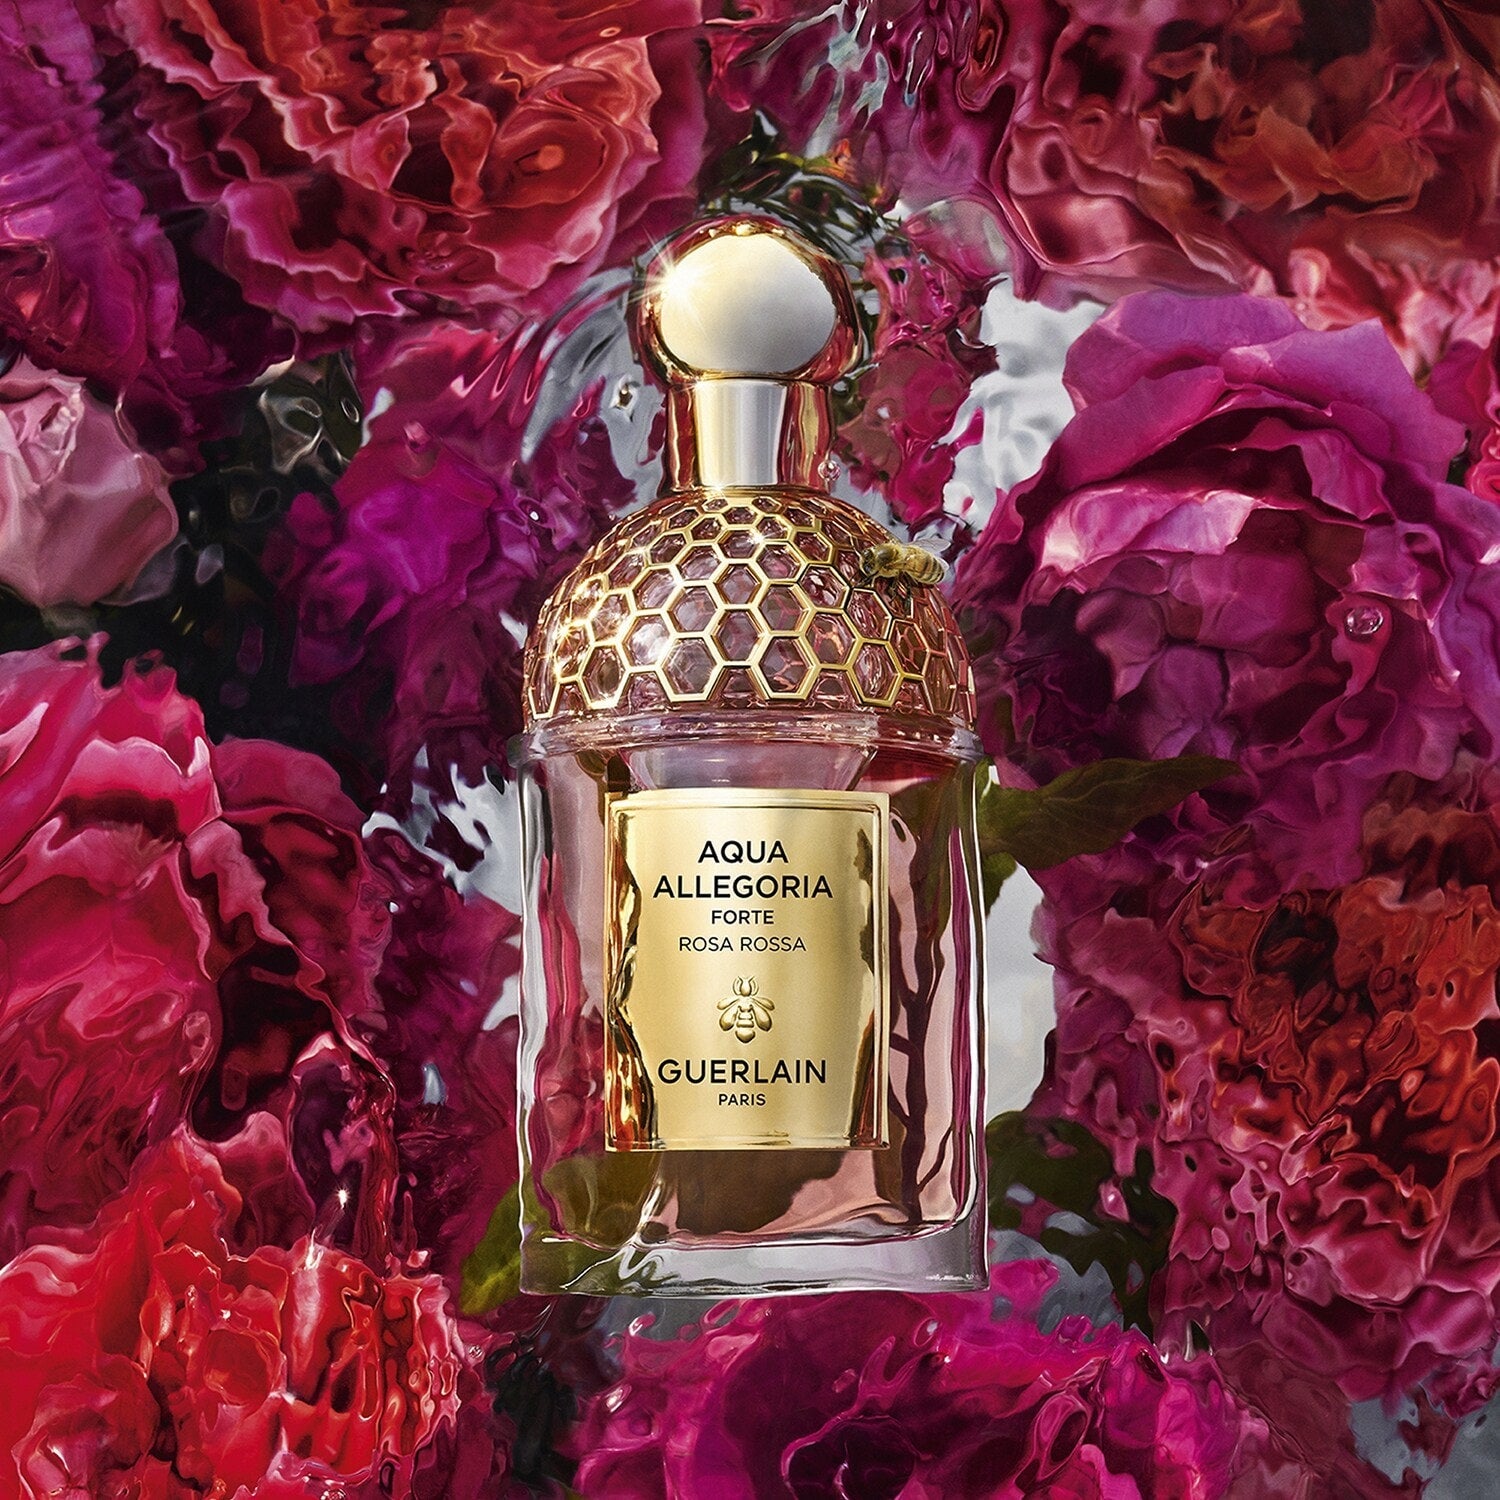 Guerlain Aqua Allegoria Forte Rosa Rossa - Eau de Parfum - Jasmine Parfums- [ean]